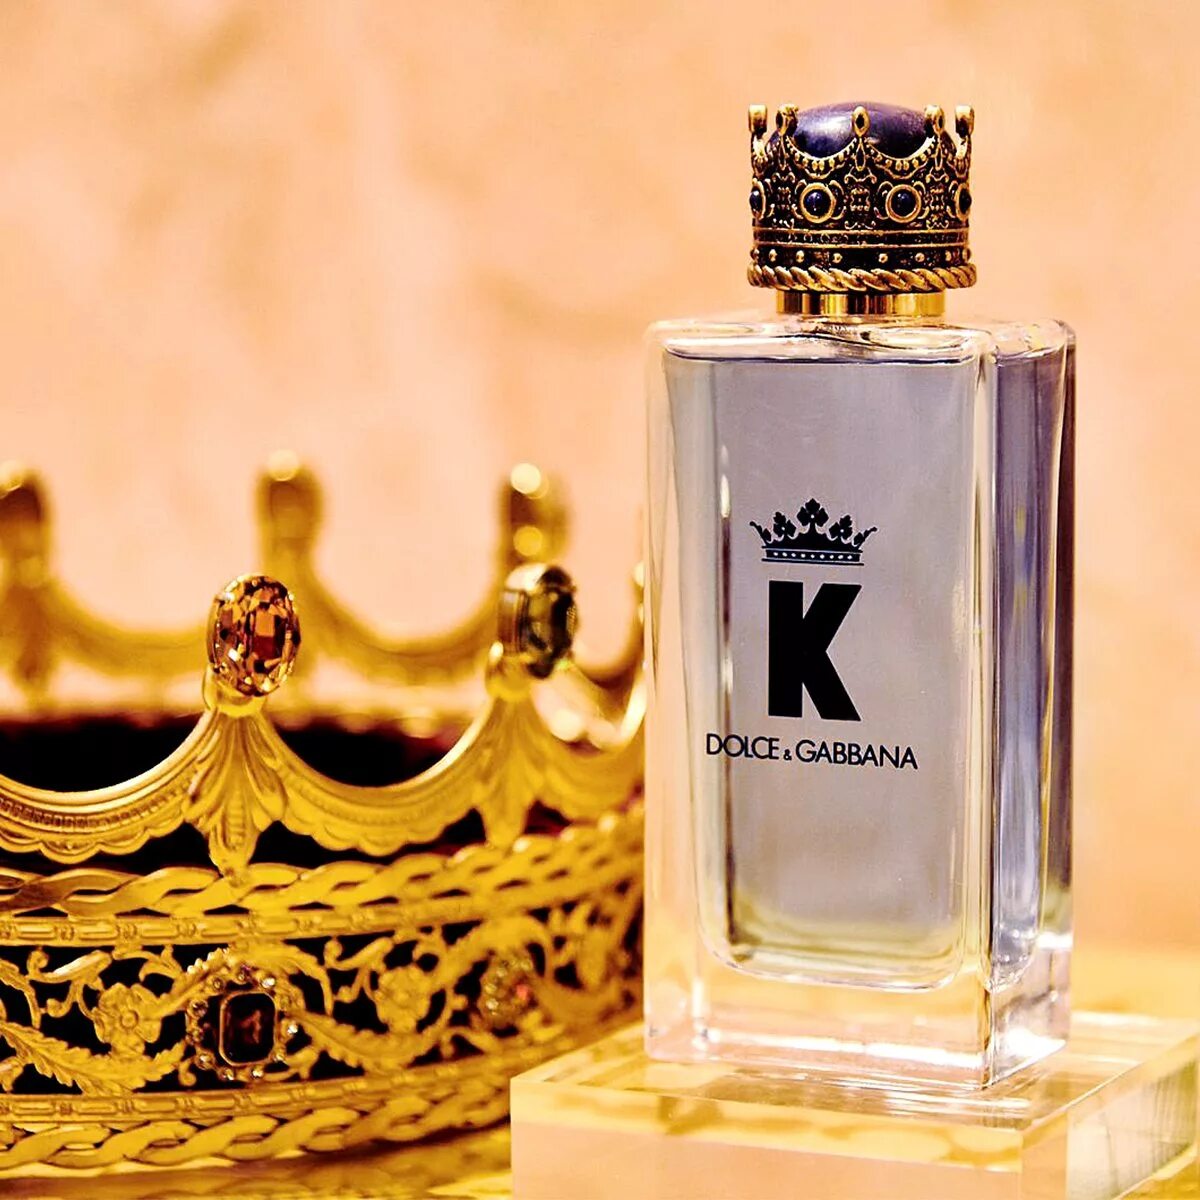 Dolce Gabbana King 100ml. Dolce Gabbana King Parfum. Dolce & Gabbana King Eau de Parfum 100 ml. Dolce Gabbana k King 100ml EDT. Дольче кинг мужские